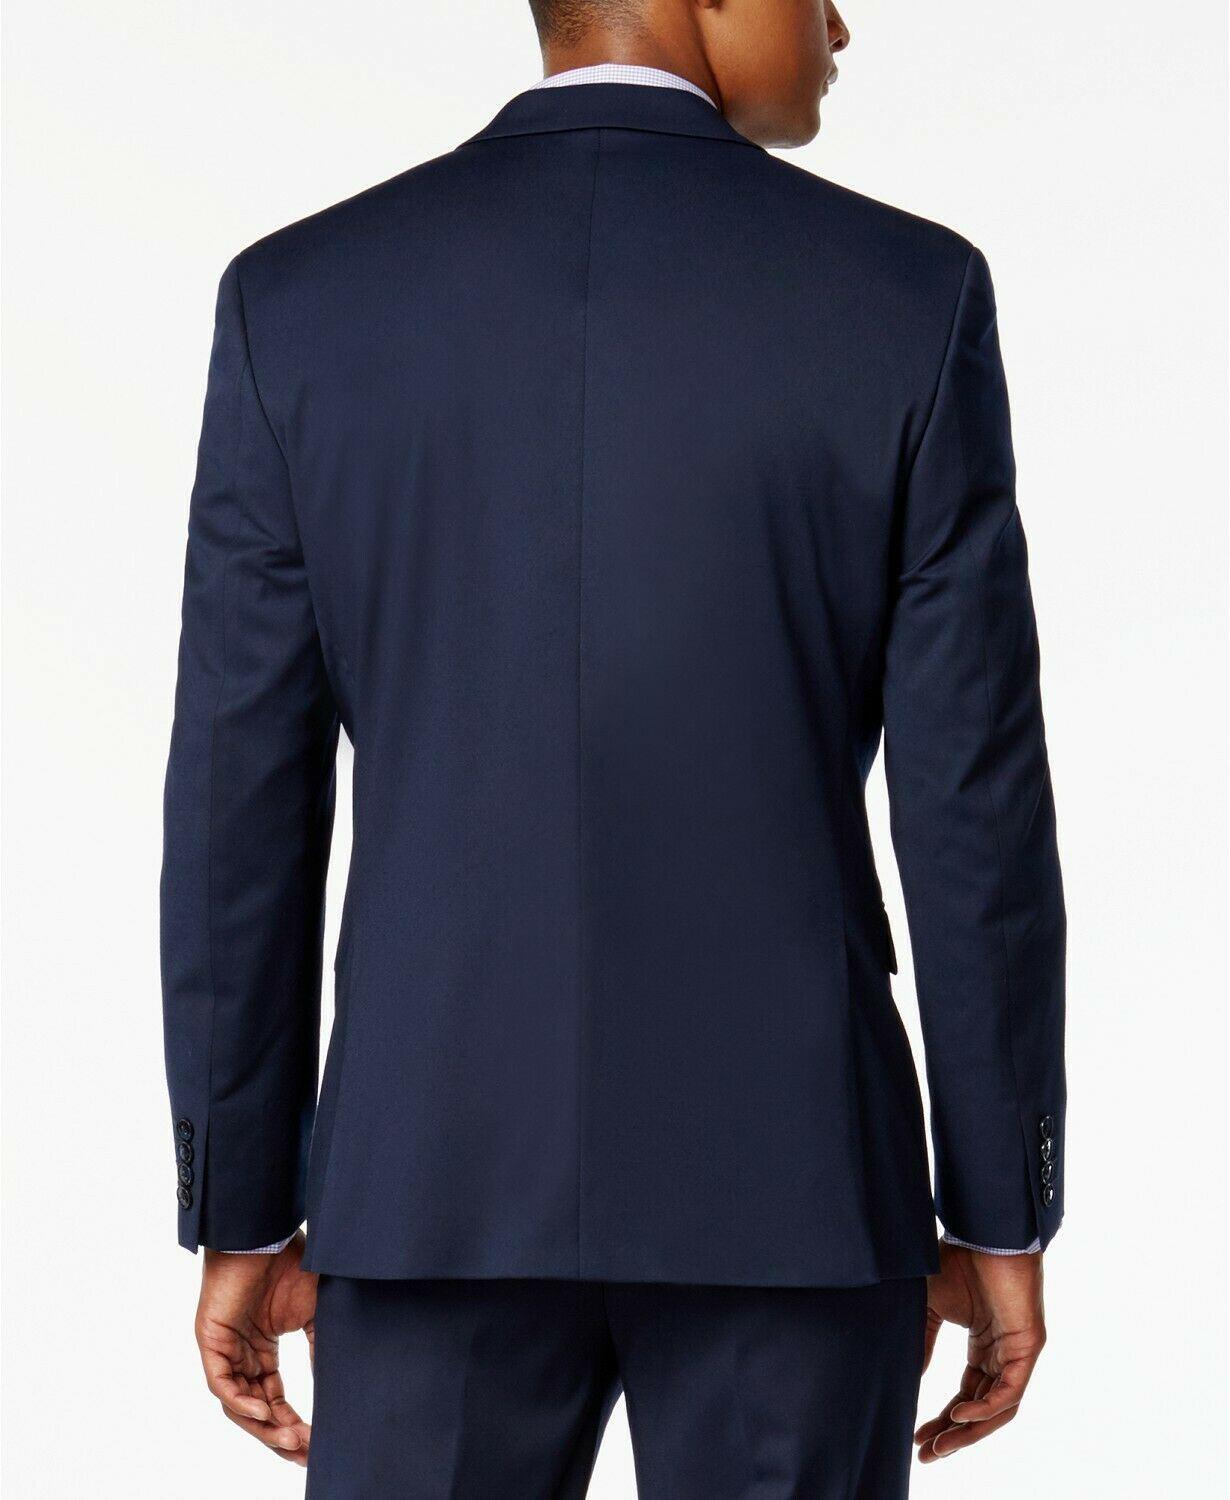 Alfani Men's Suit Jacket 42R Navy Blue Stretch Performance Slim-Fit - Bristol Apparel Co